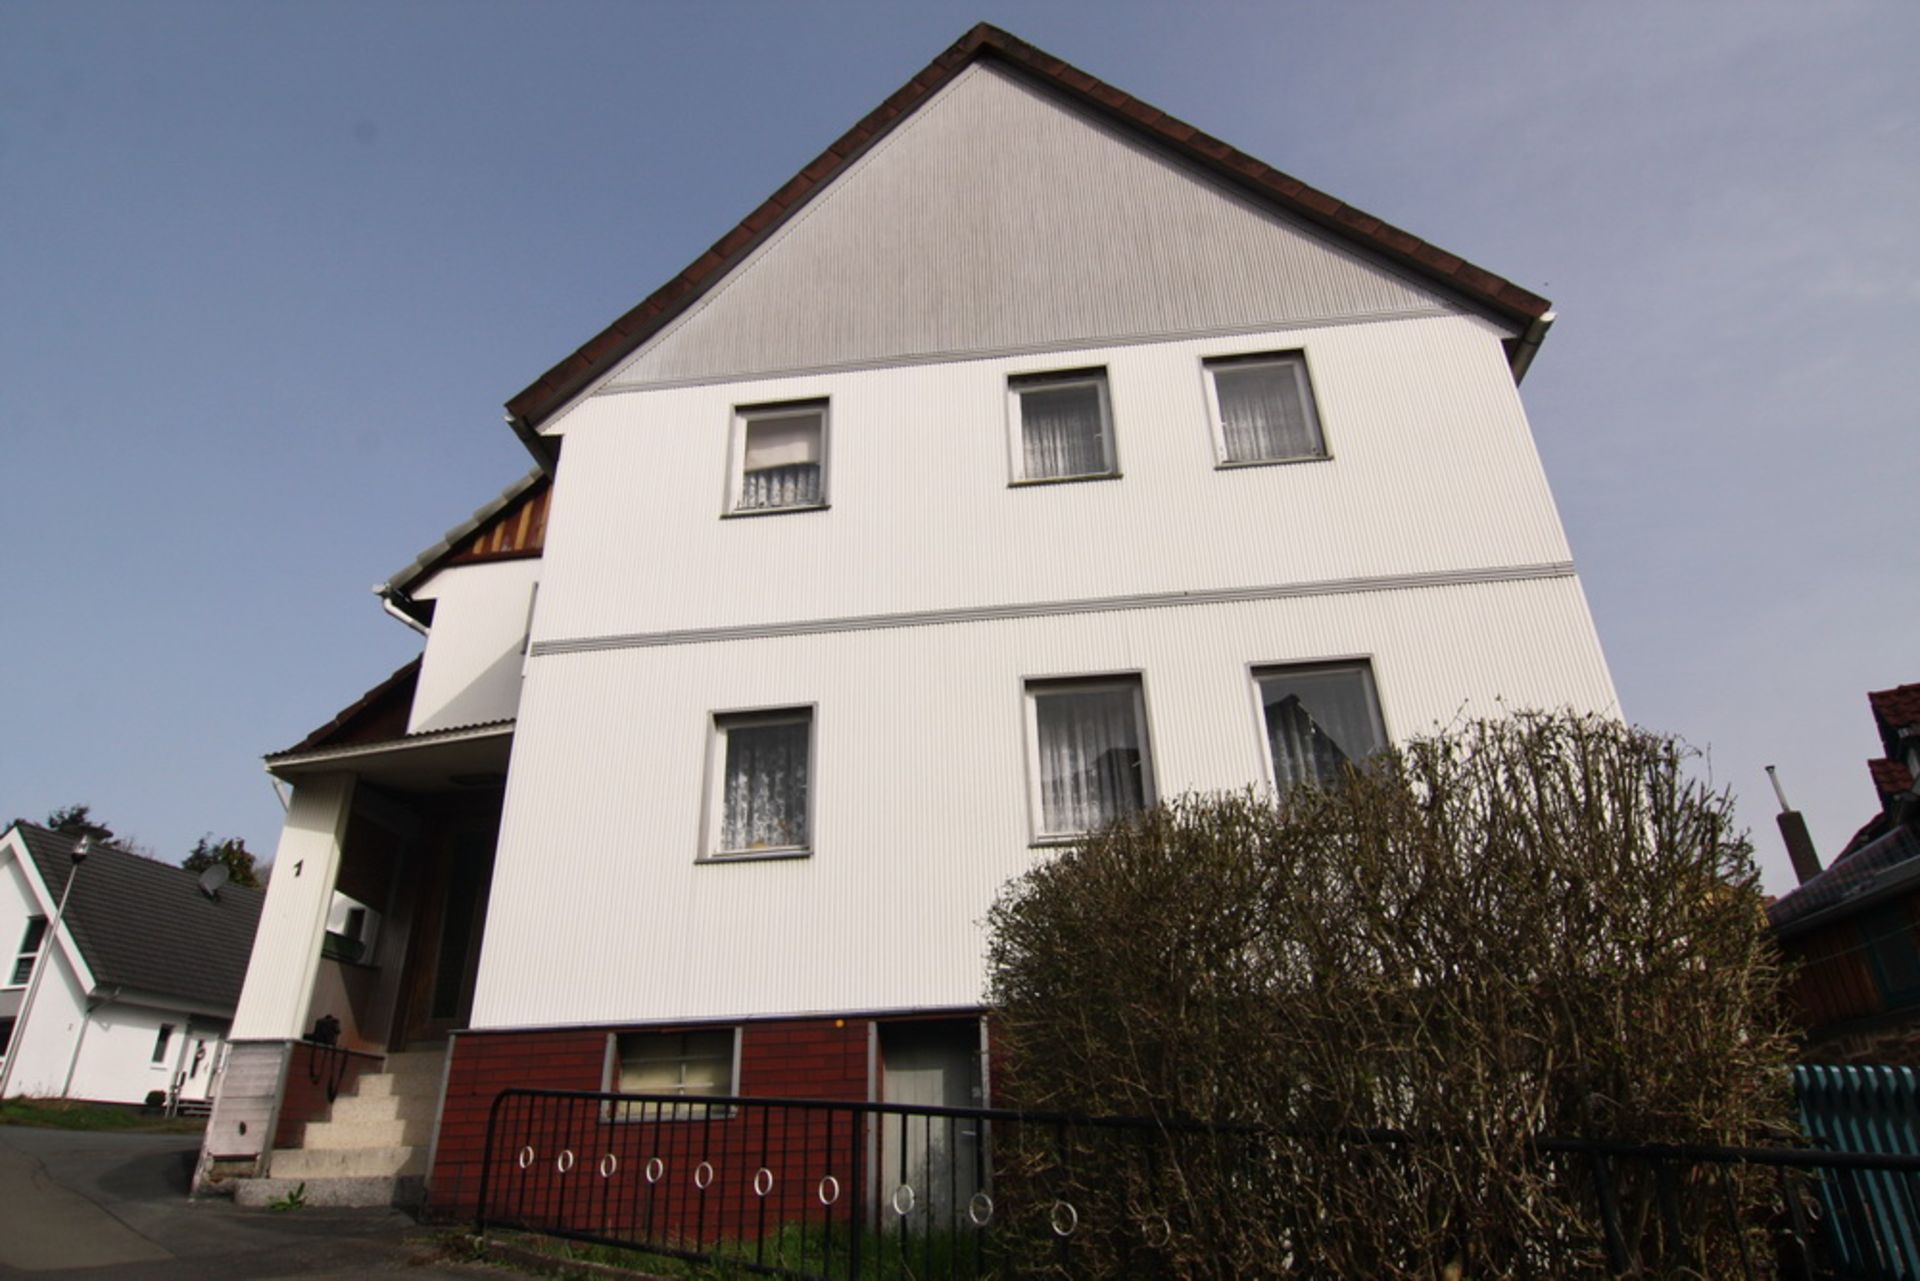 Hessen reg. Germany - Two Storey home + attic & garage - Image 3 of 62